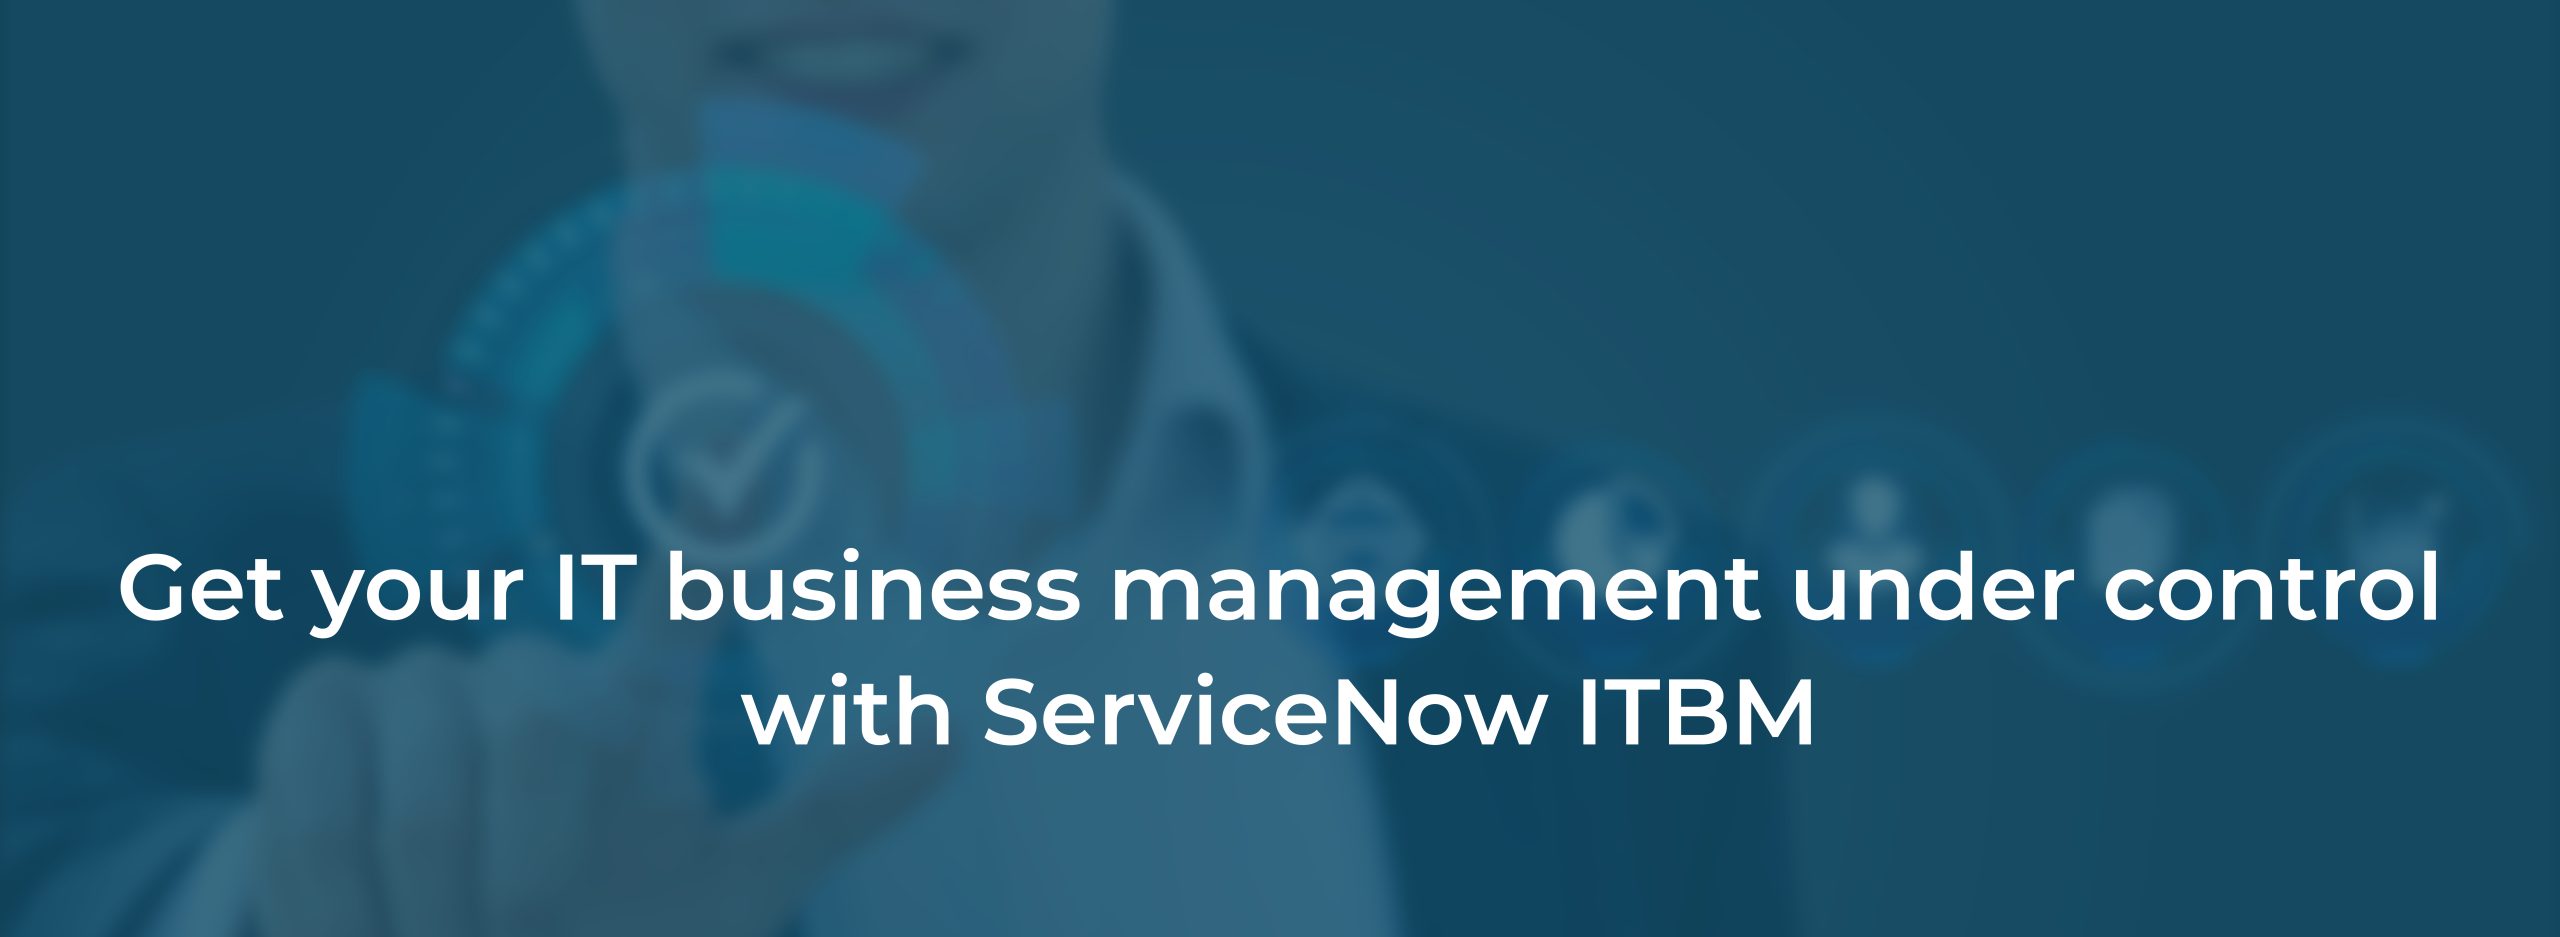 ServiceNow ITBM